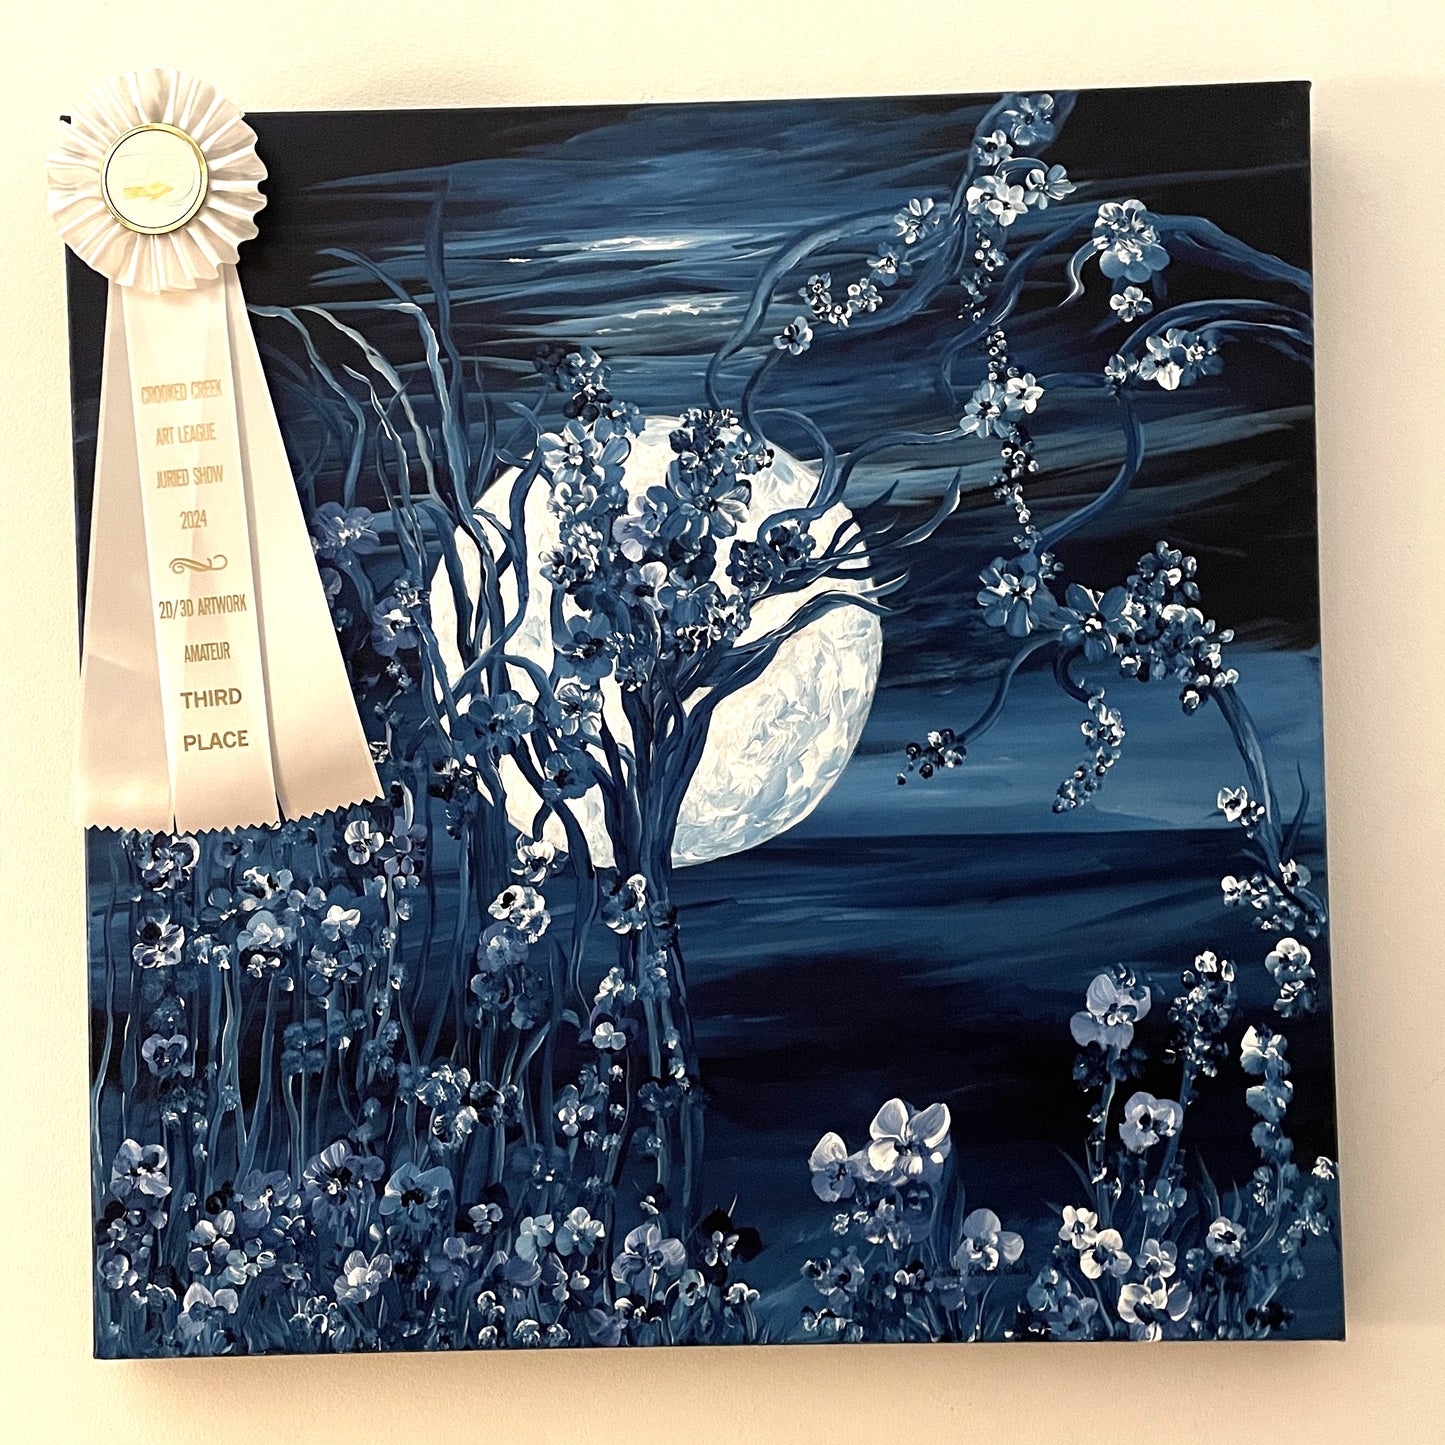 Once in a Blue Moon Original Painting by Brenda Gadow Clark Award Winning